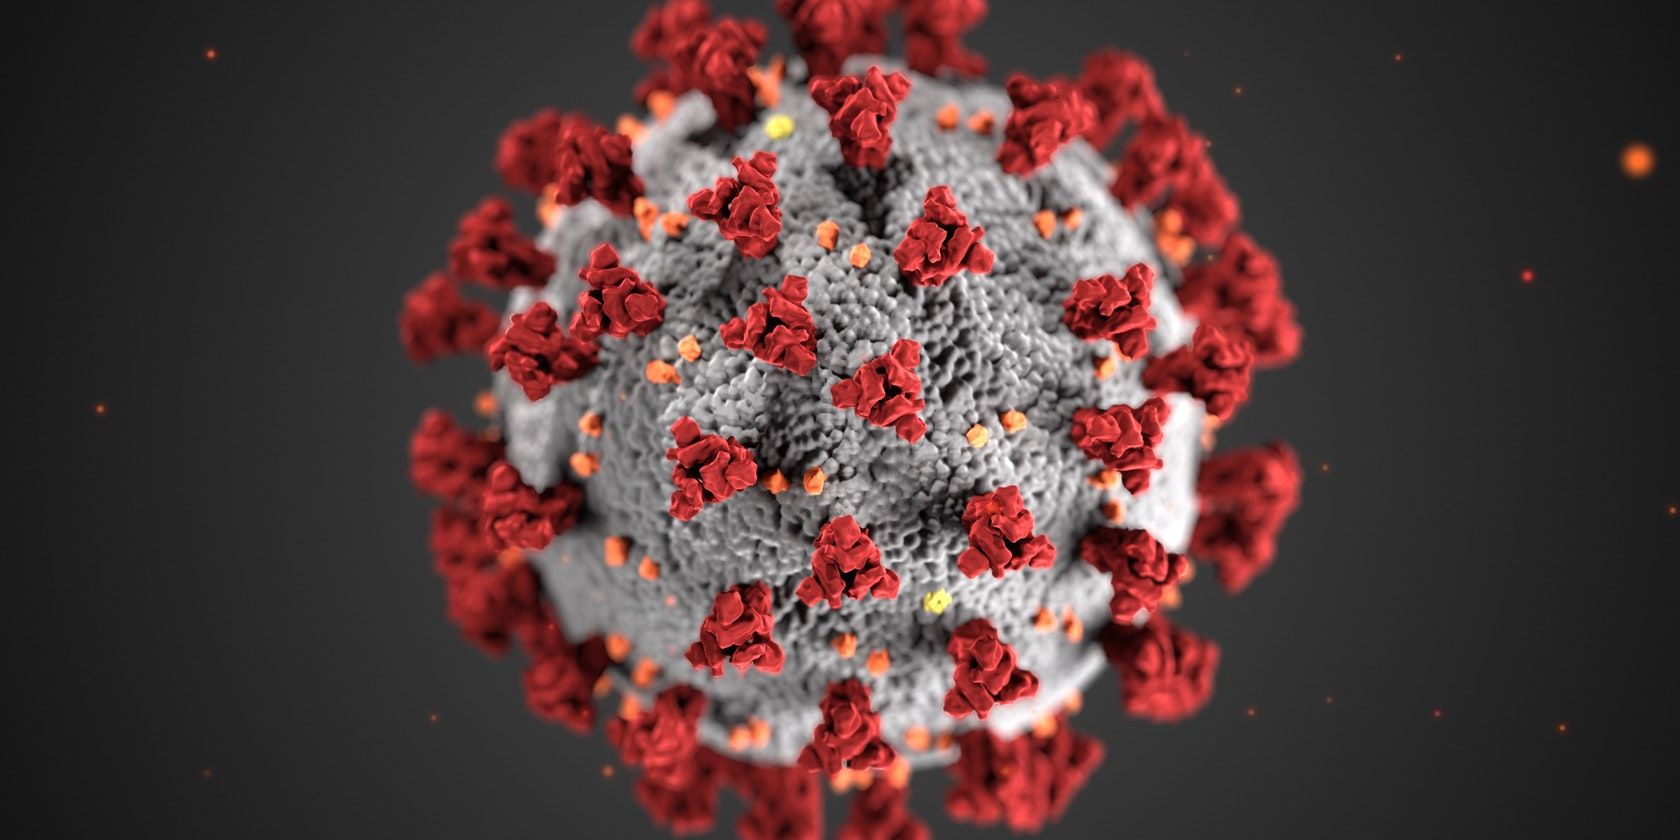 Coronavirus, as observed under a microscope